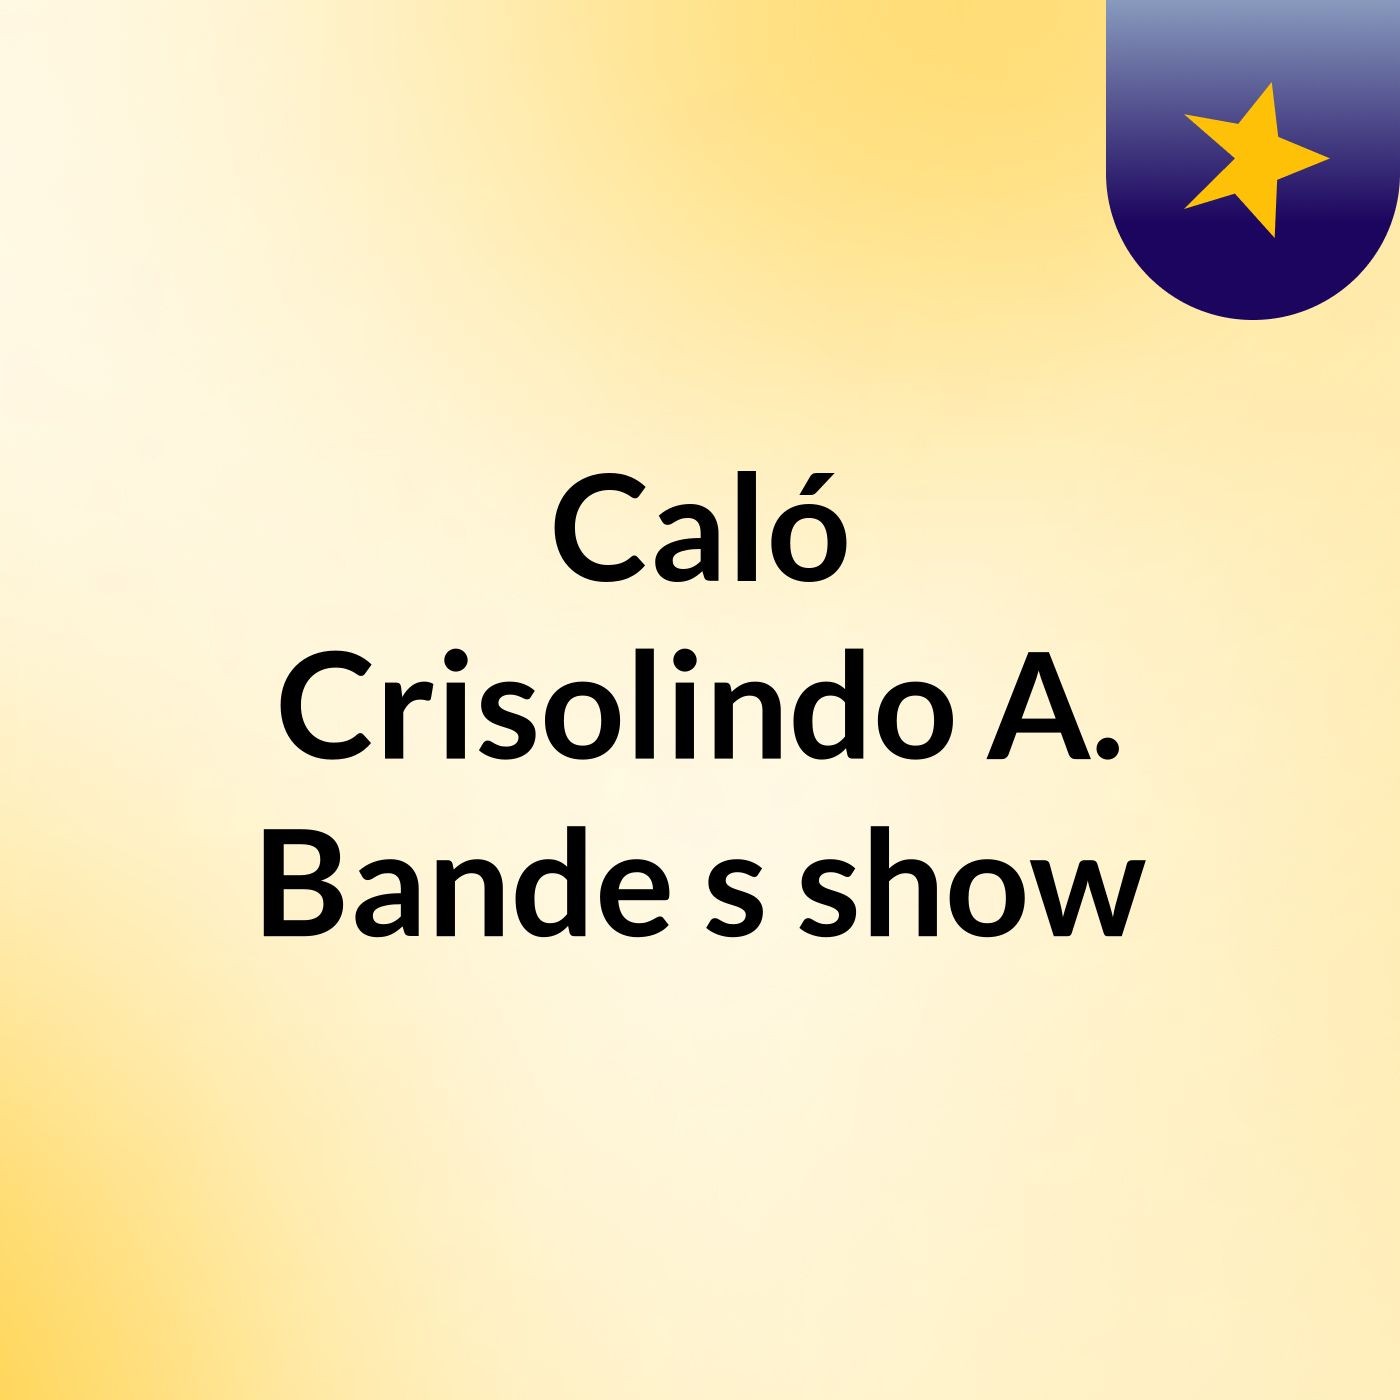 Caló Crisolindo A. Bande's show